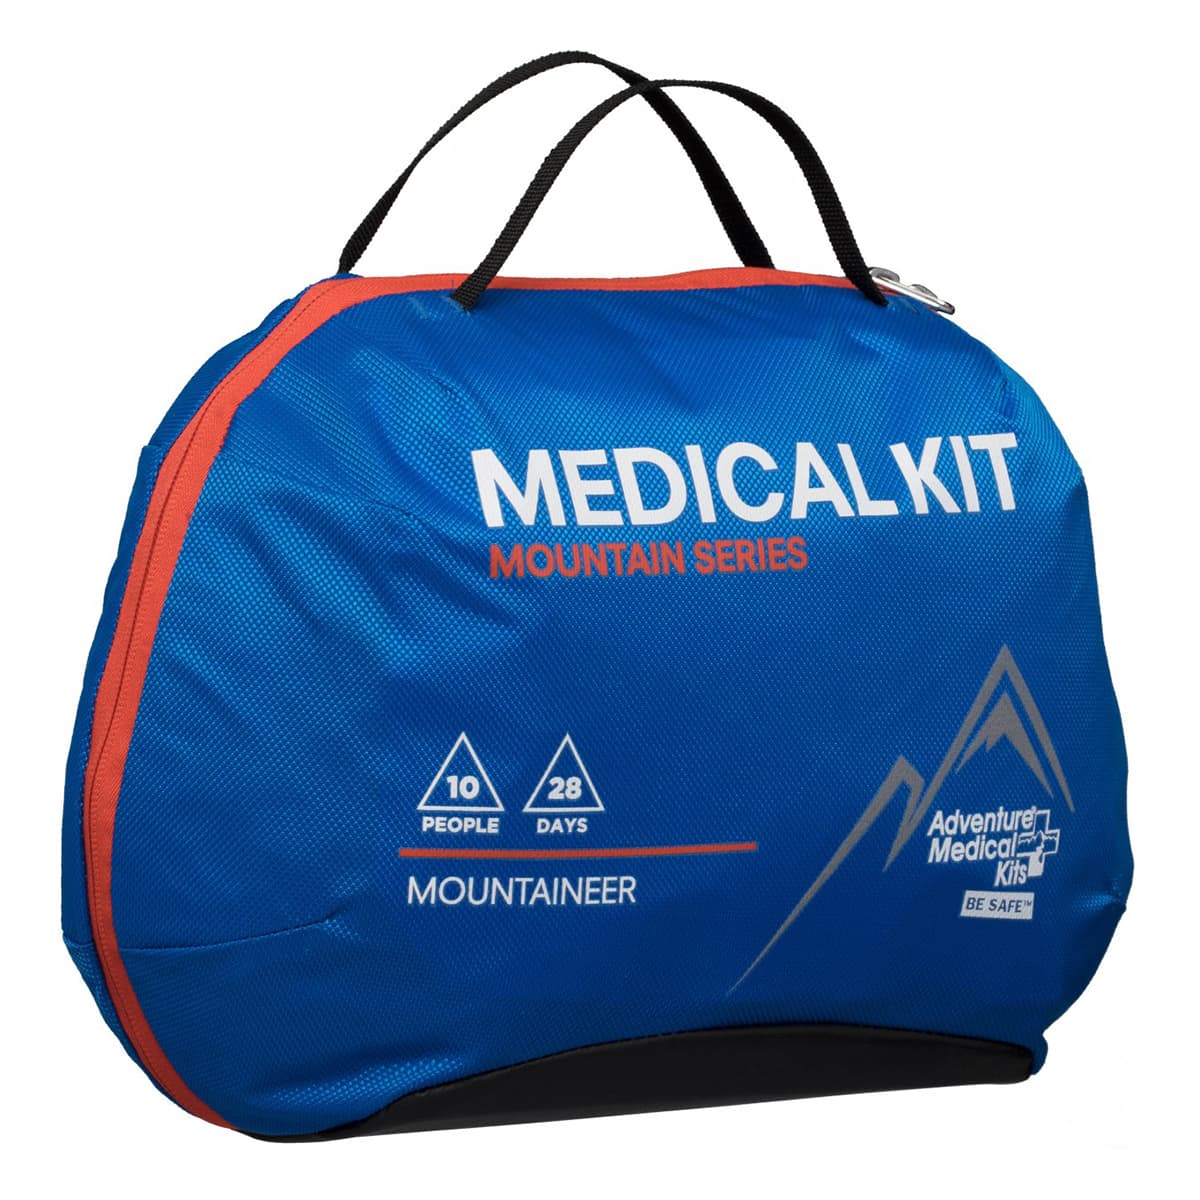 Mountain Mountaineer Medical Kit